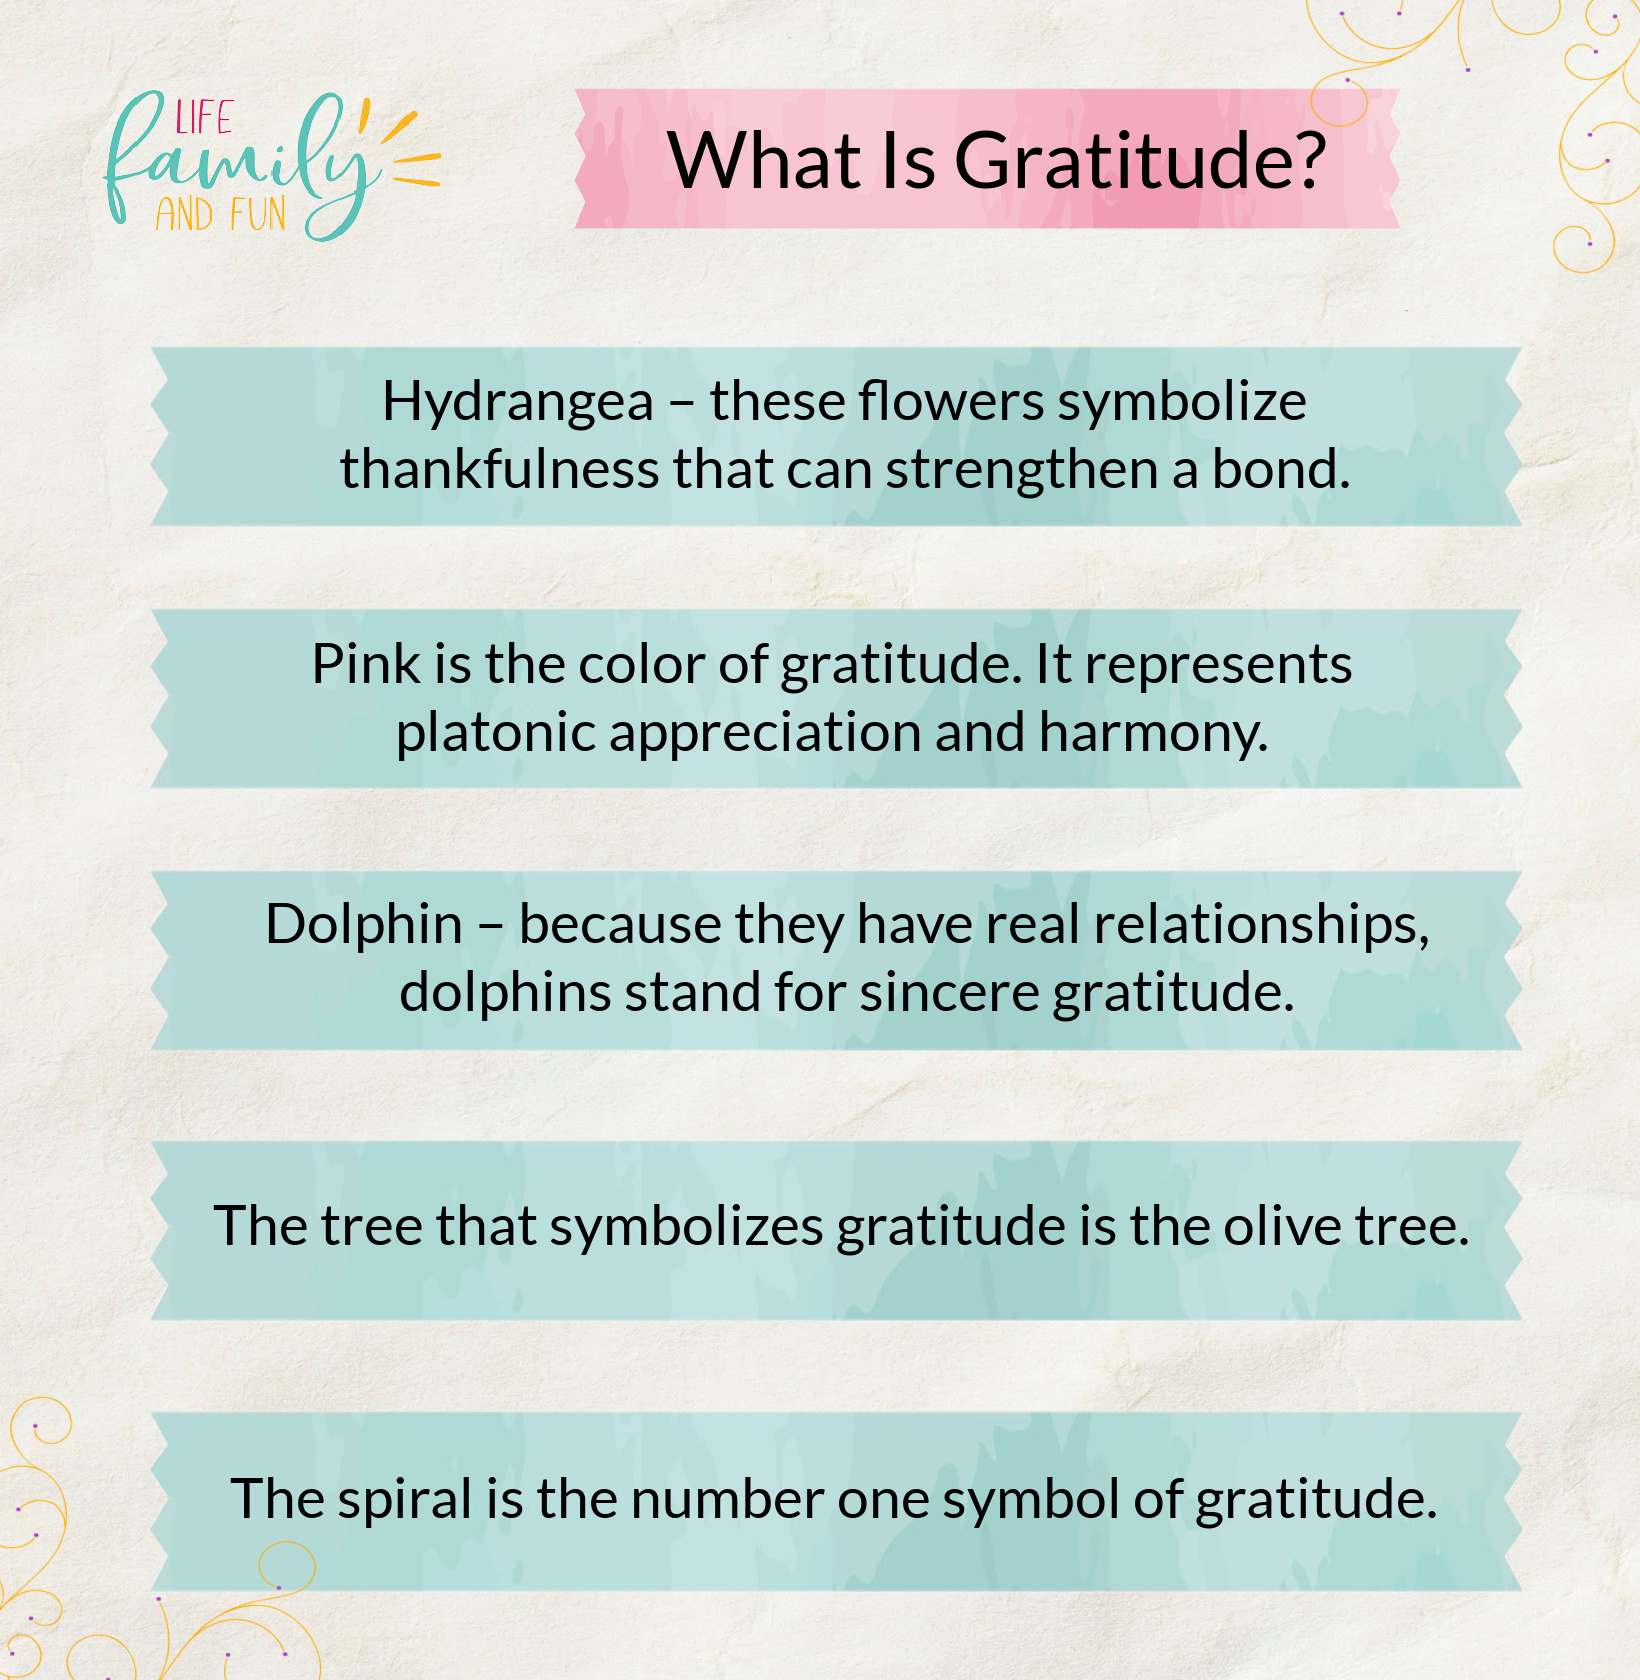 What Is Gratitude?